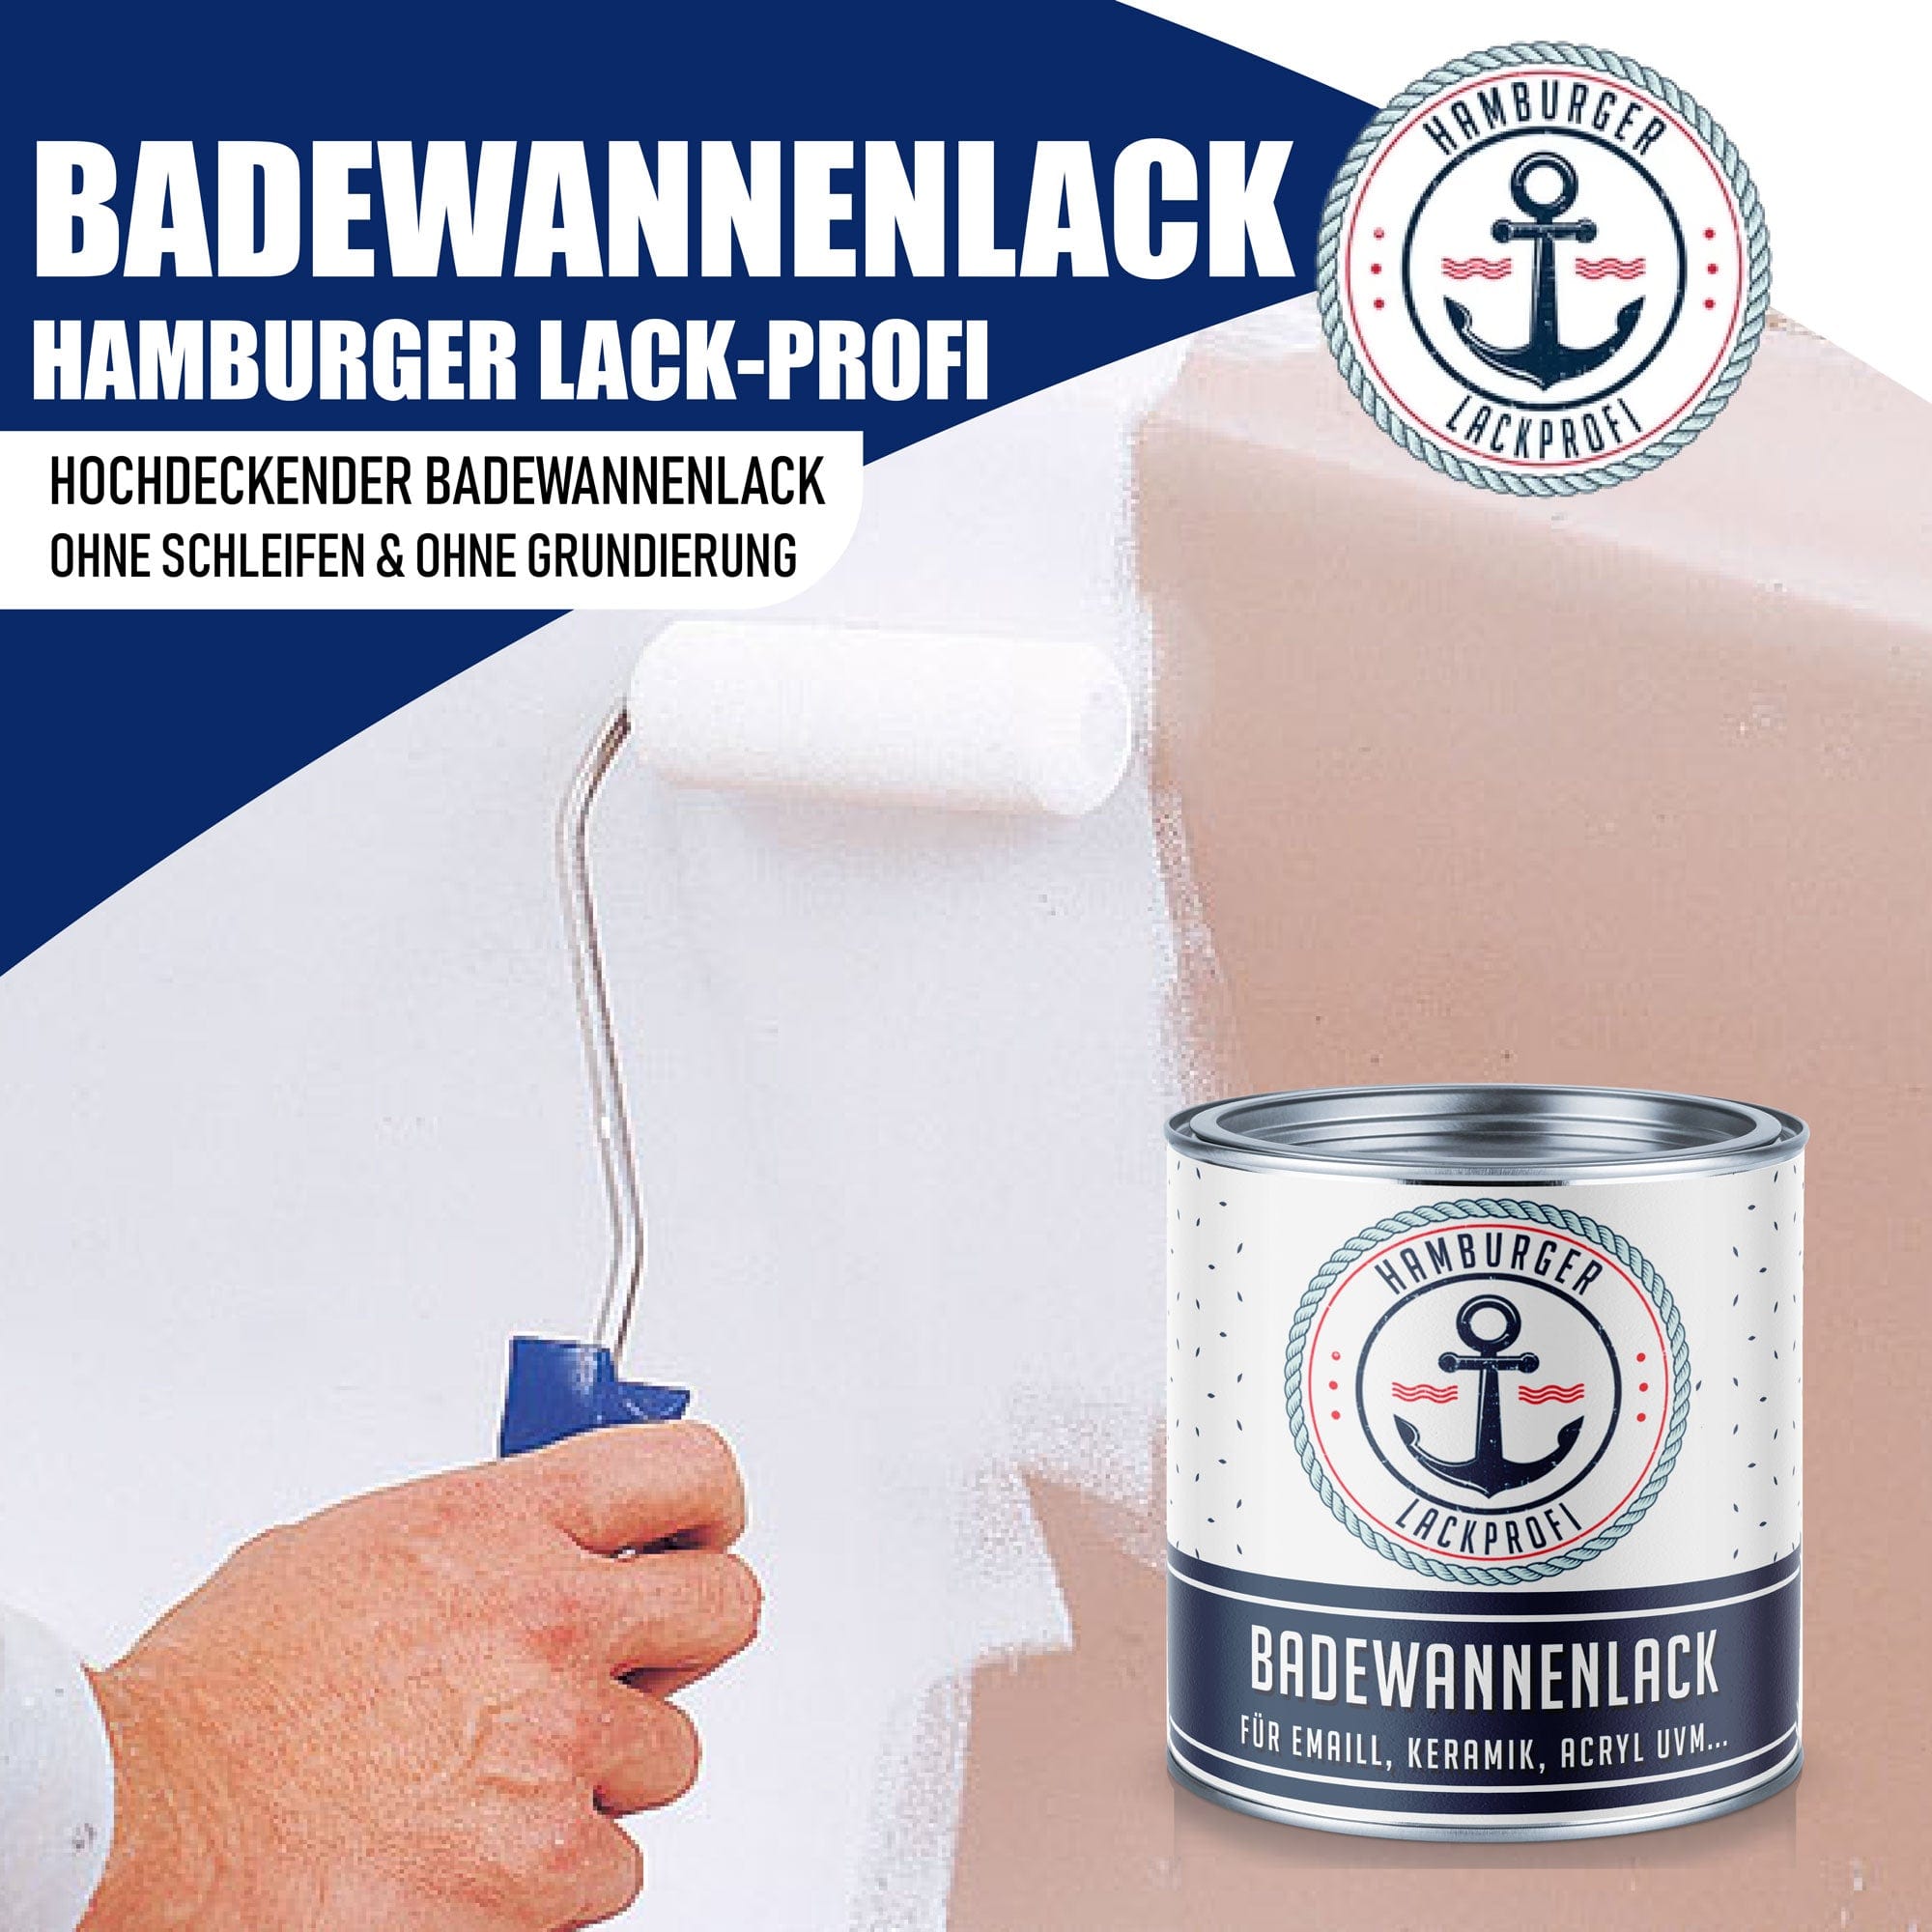 Hamburger Lack-Profi Badewannenlack Hamburger Lack-Profi 2K Badewannenlack mit Lackierset (X300) & Verdünnung (1 L) - 30% Sparangebot